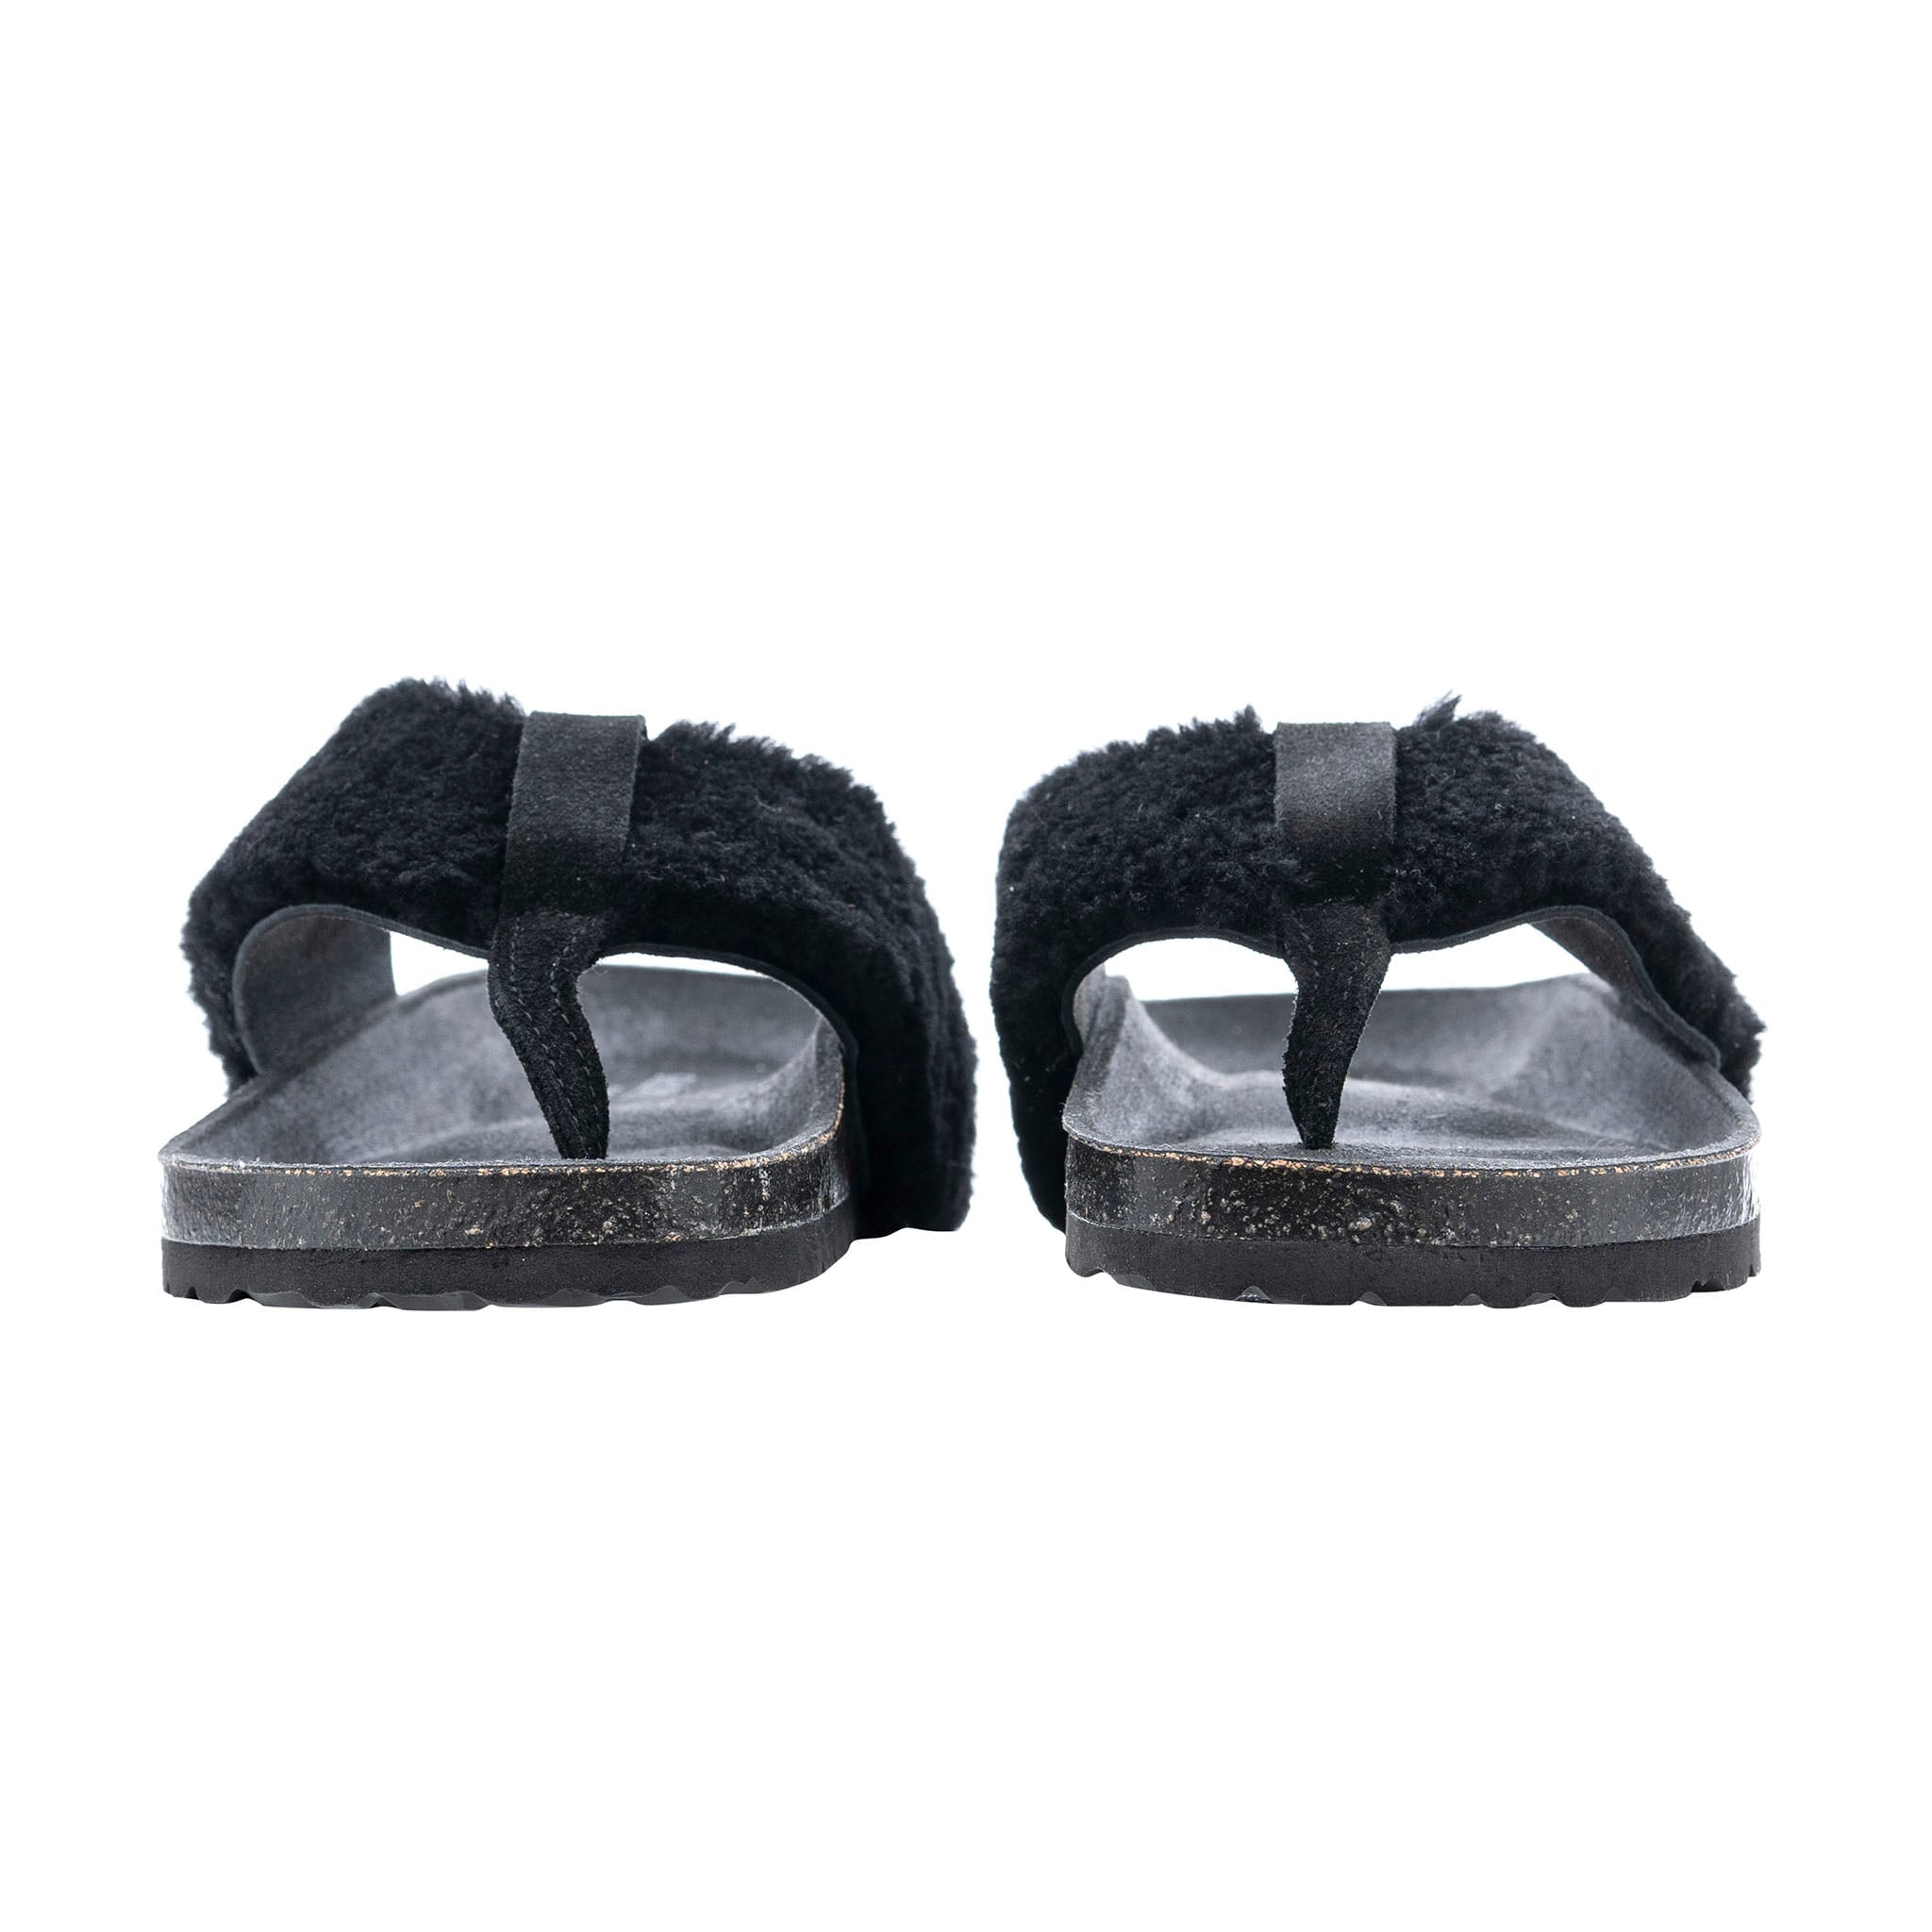 Bondi slippers